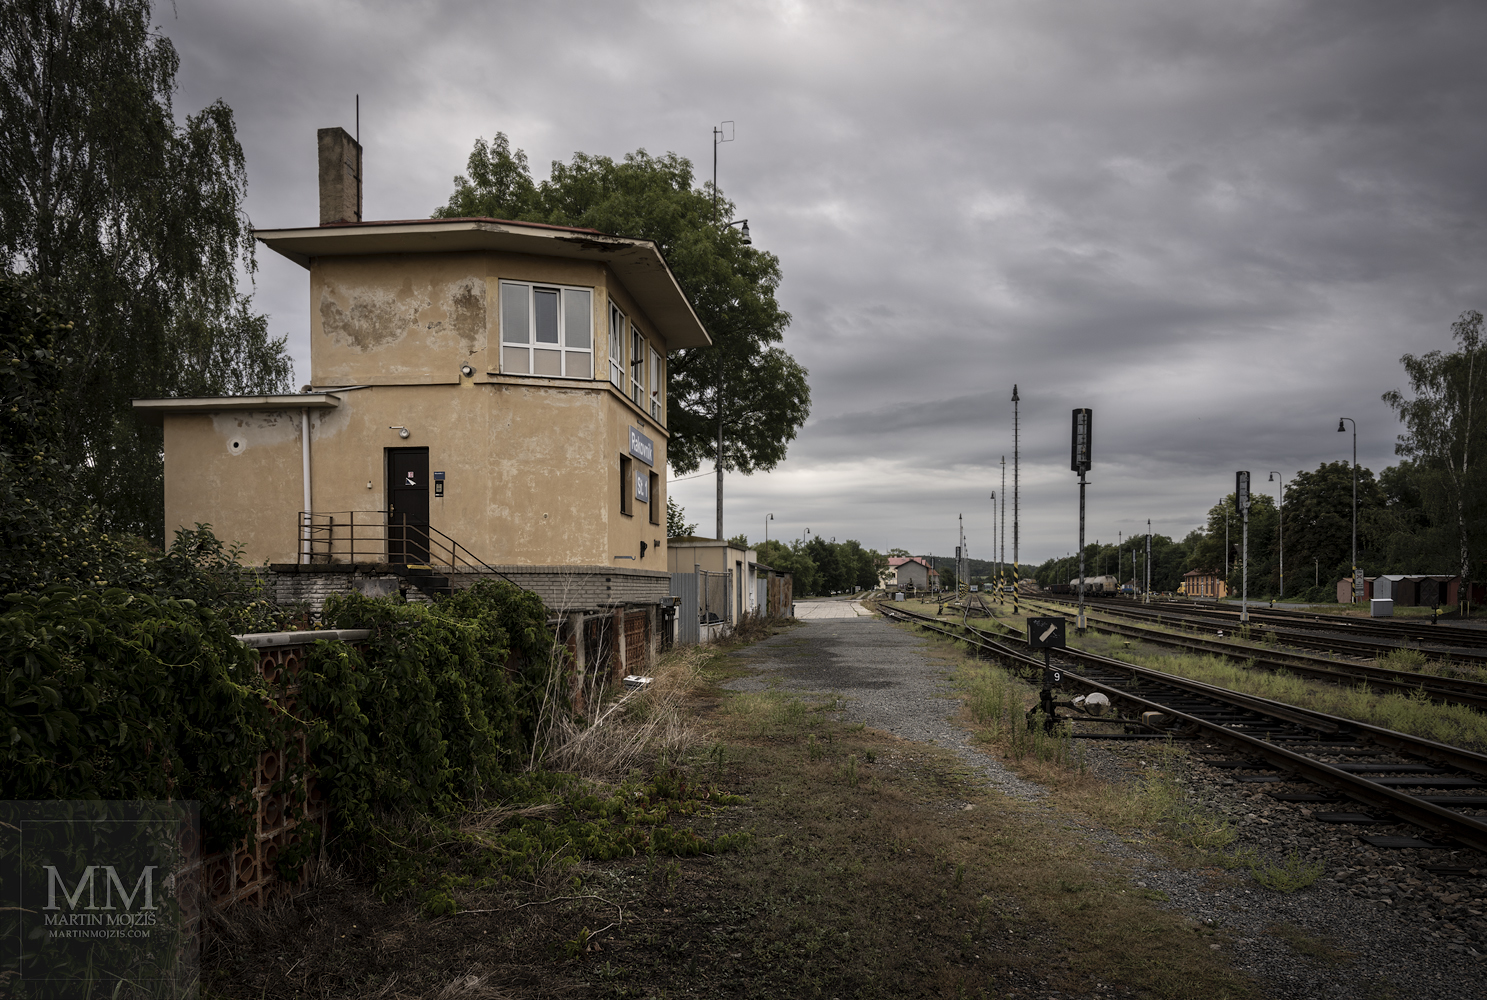 Signal house 1 near the northwestern heading. Railway station Rakovnik.